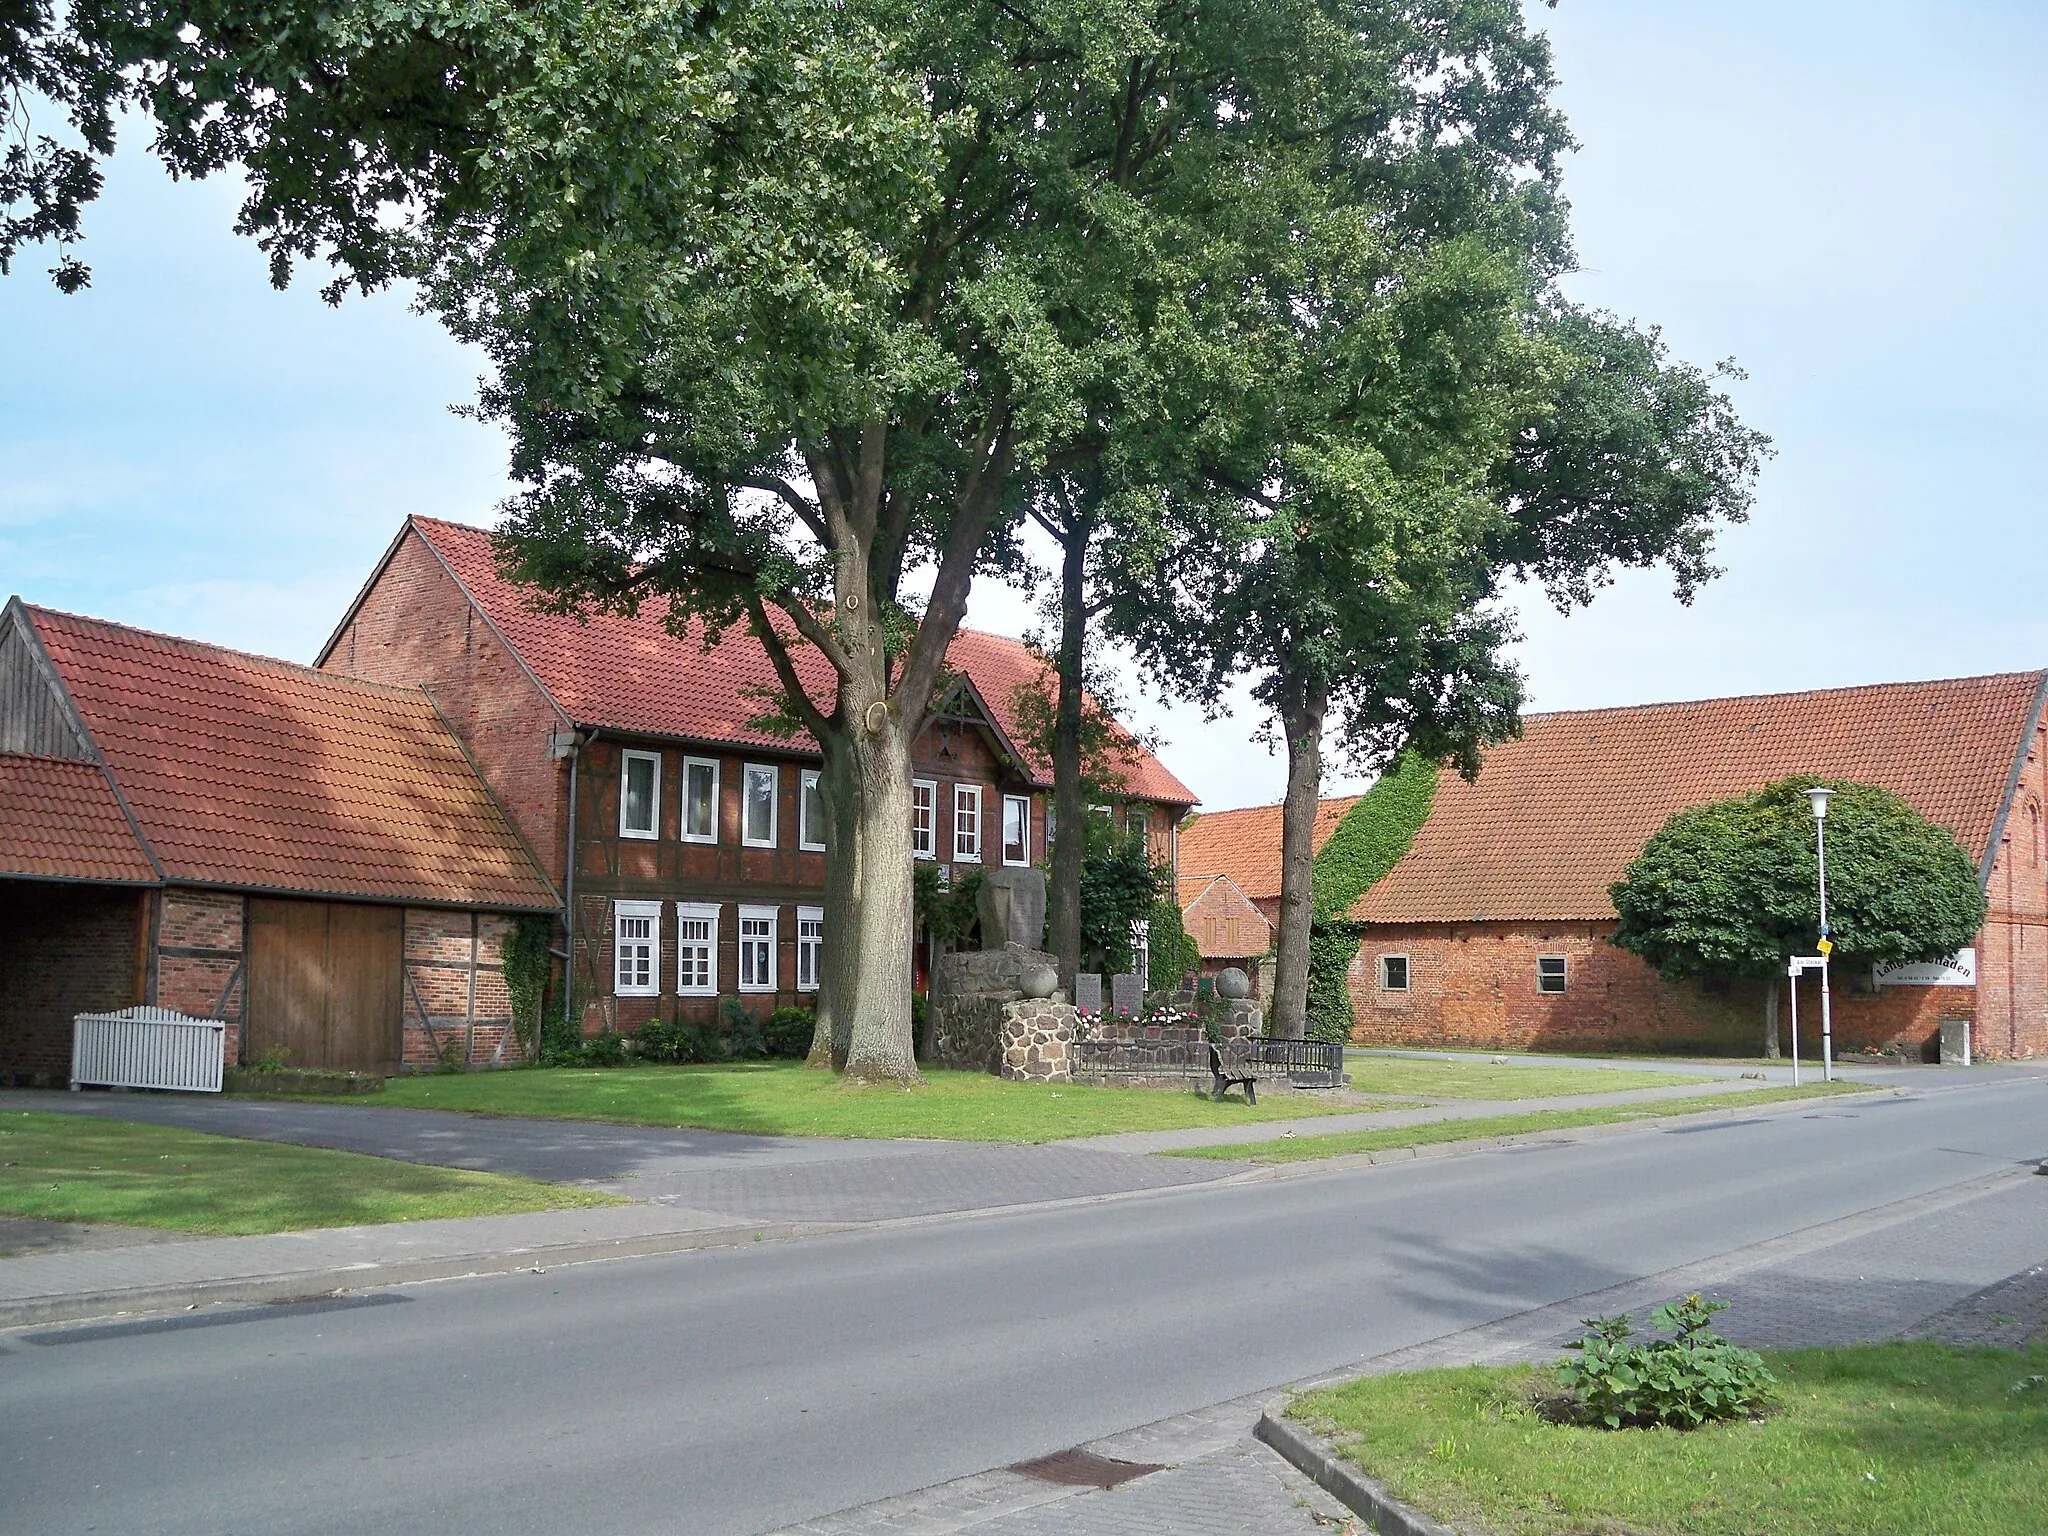 Photo showing: Zicherie, Lower Saxony, Village centre with war commemoration monuments